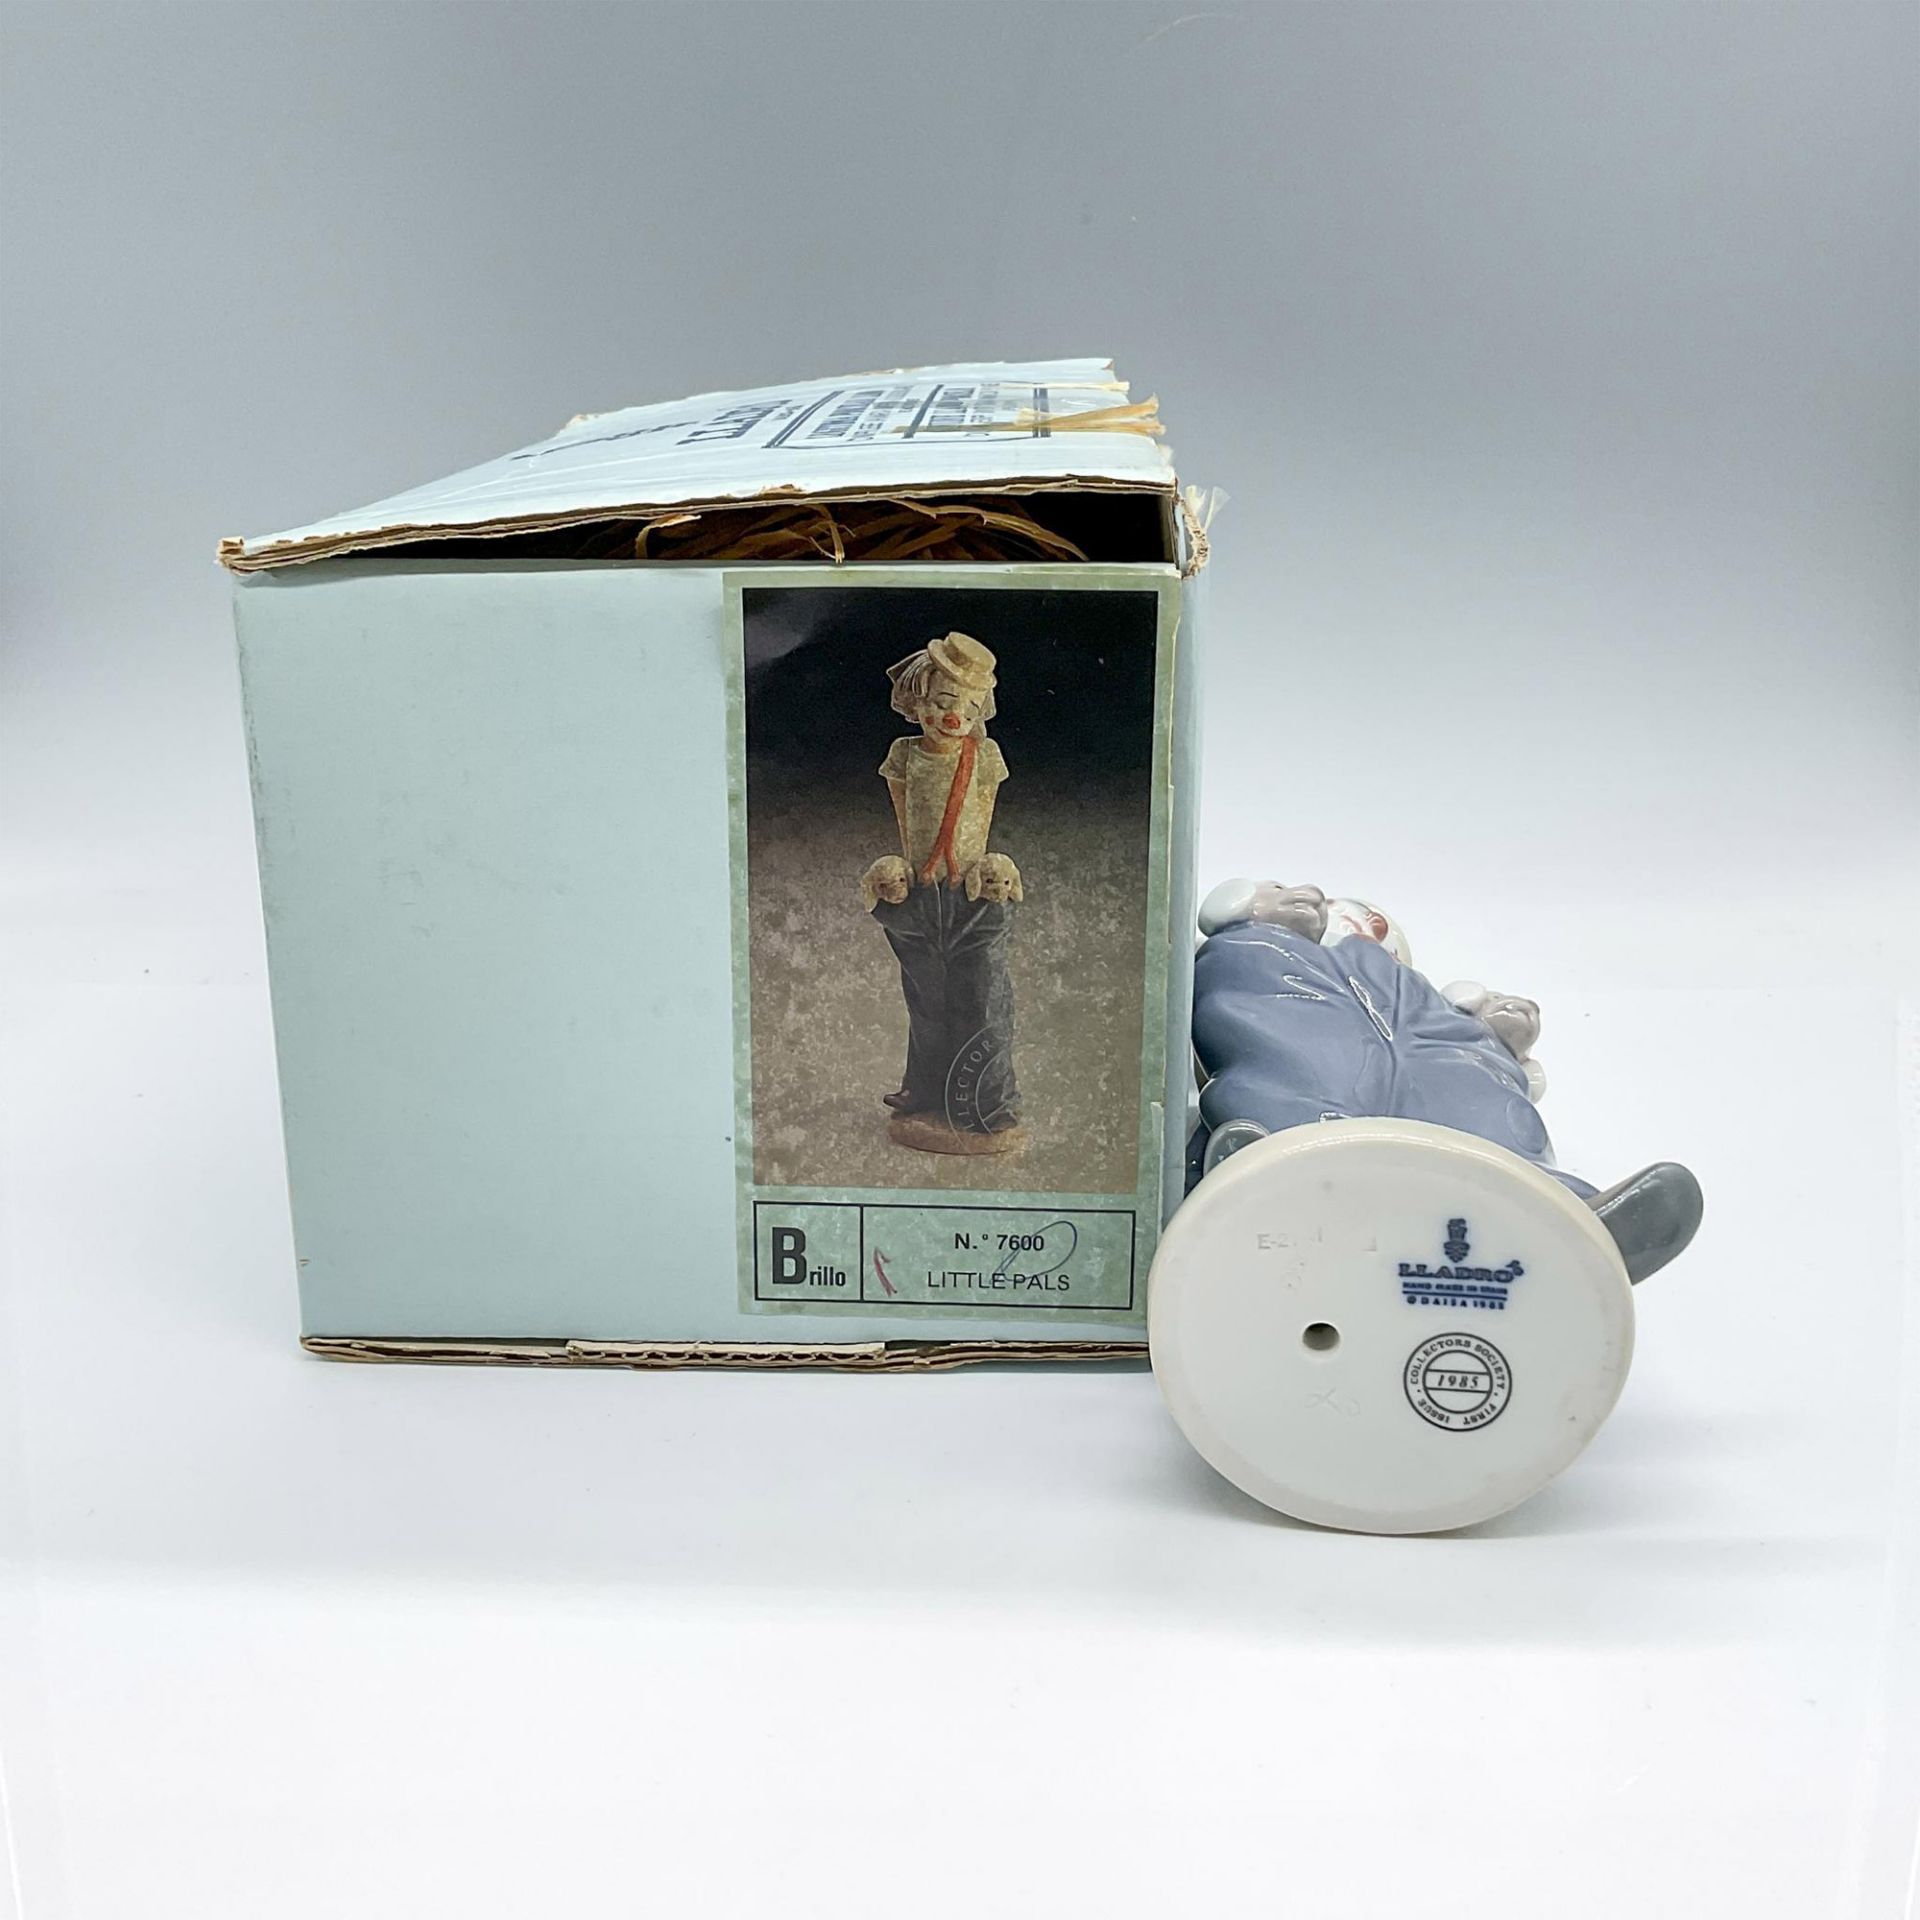 Little Pals 7600 - Lladro Porcelain Figurine - Bild 5 aus 5